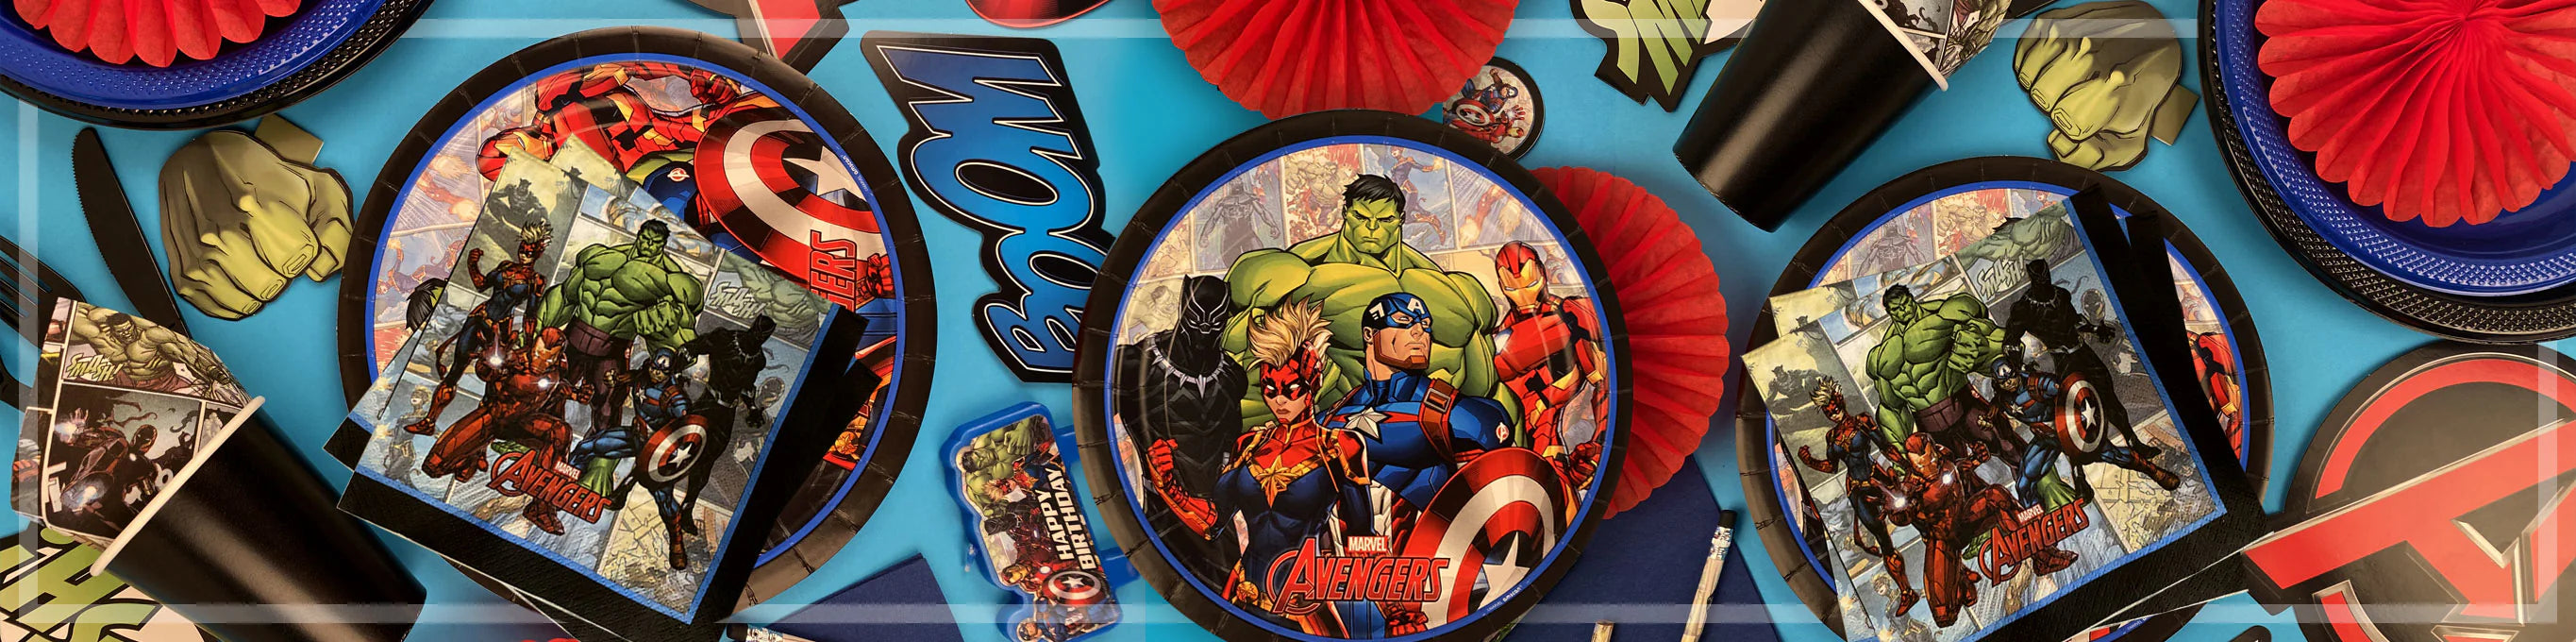 Marvel Avengers Decorations